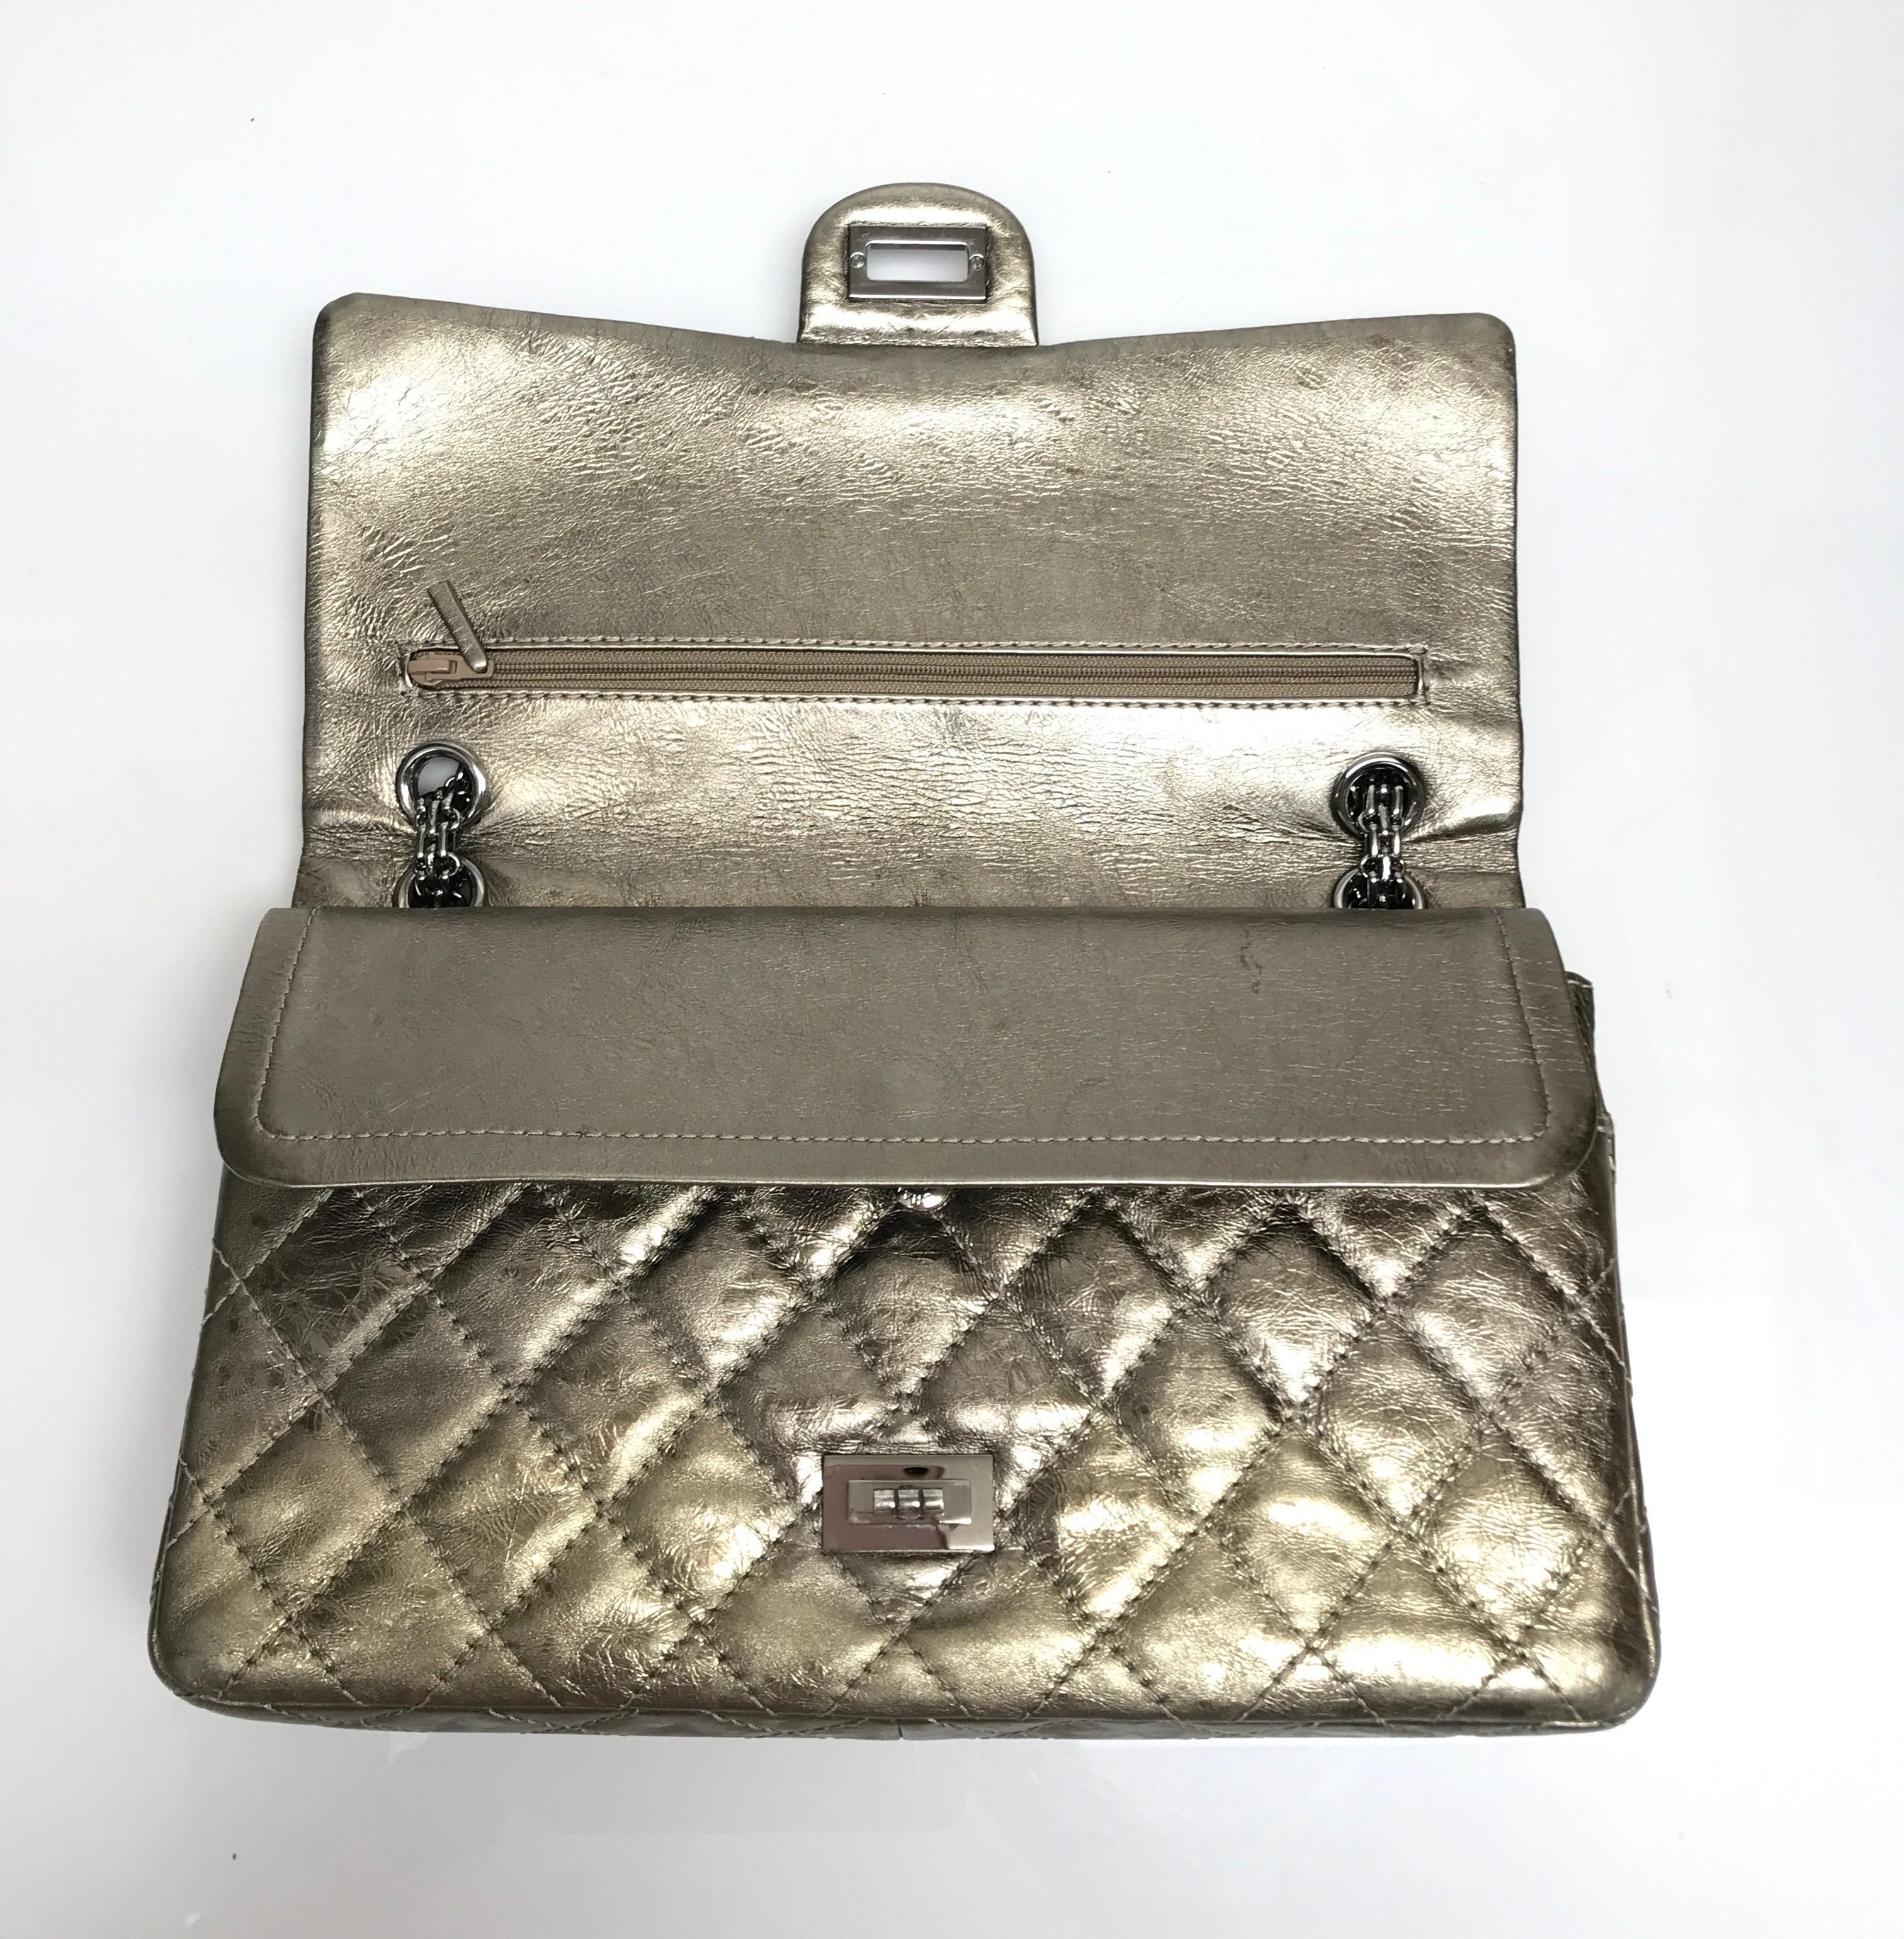 Chanel bronze metallic Re-issue 226 handbag 1